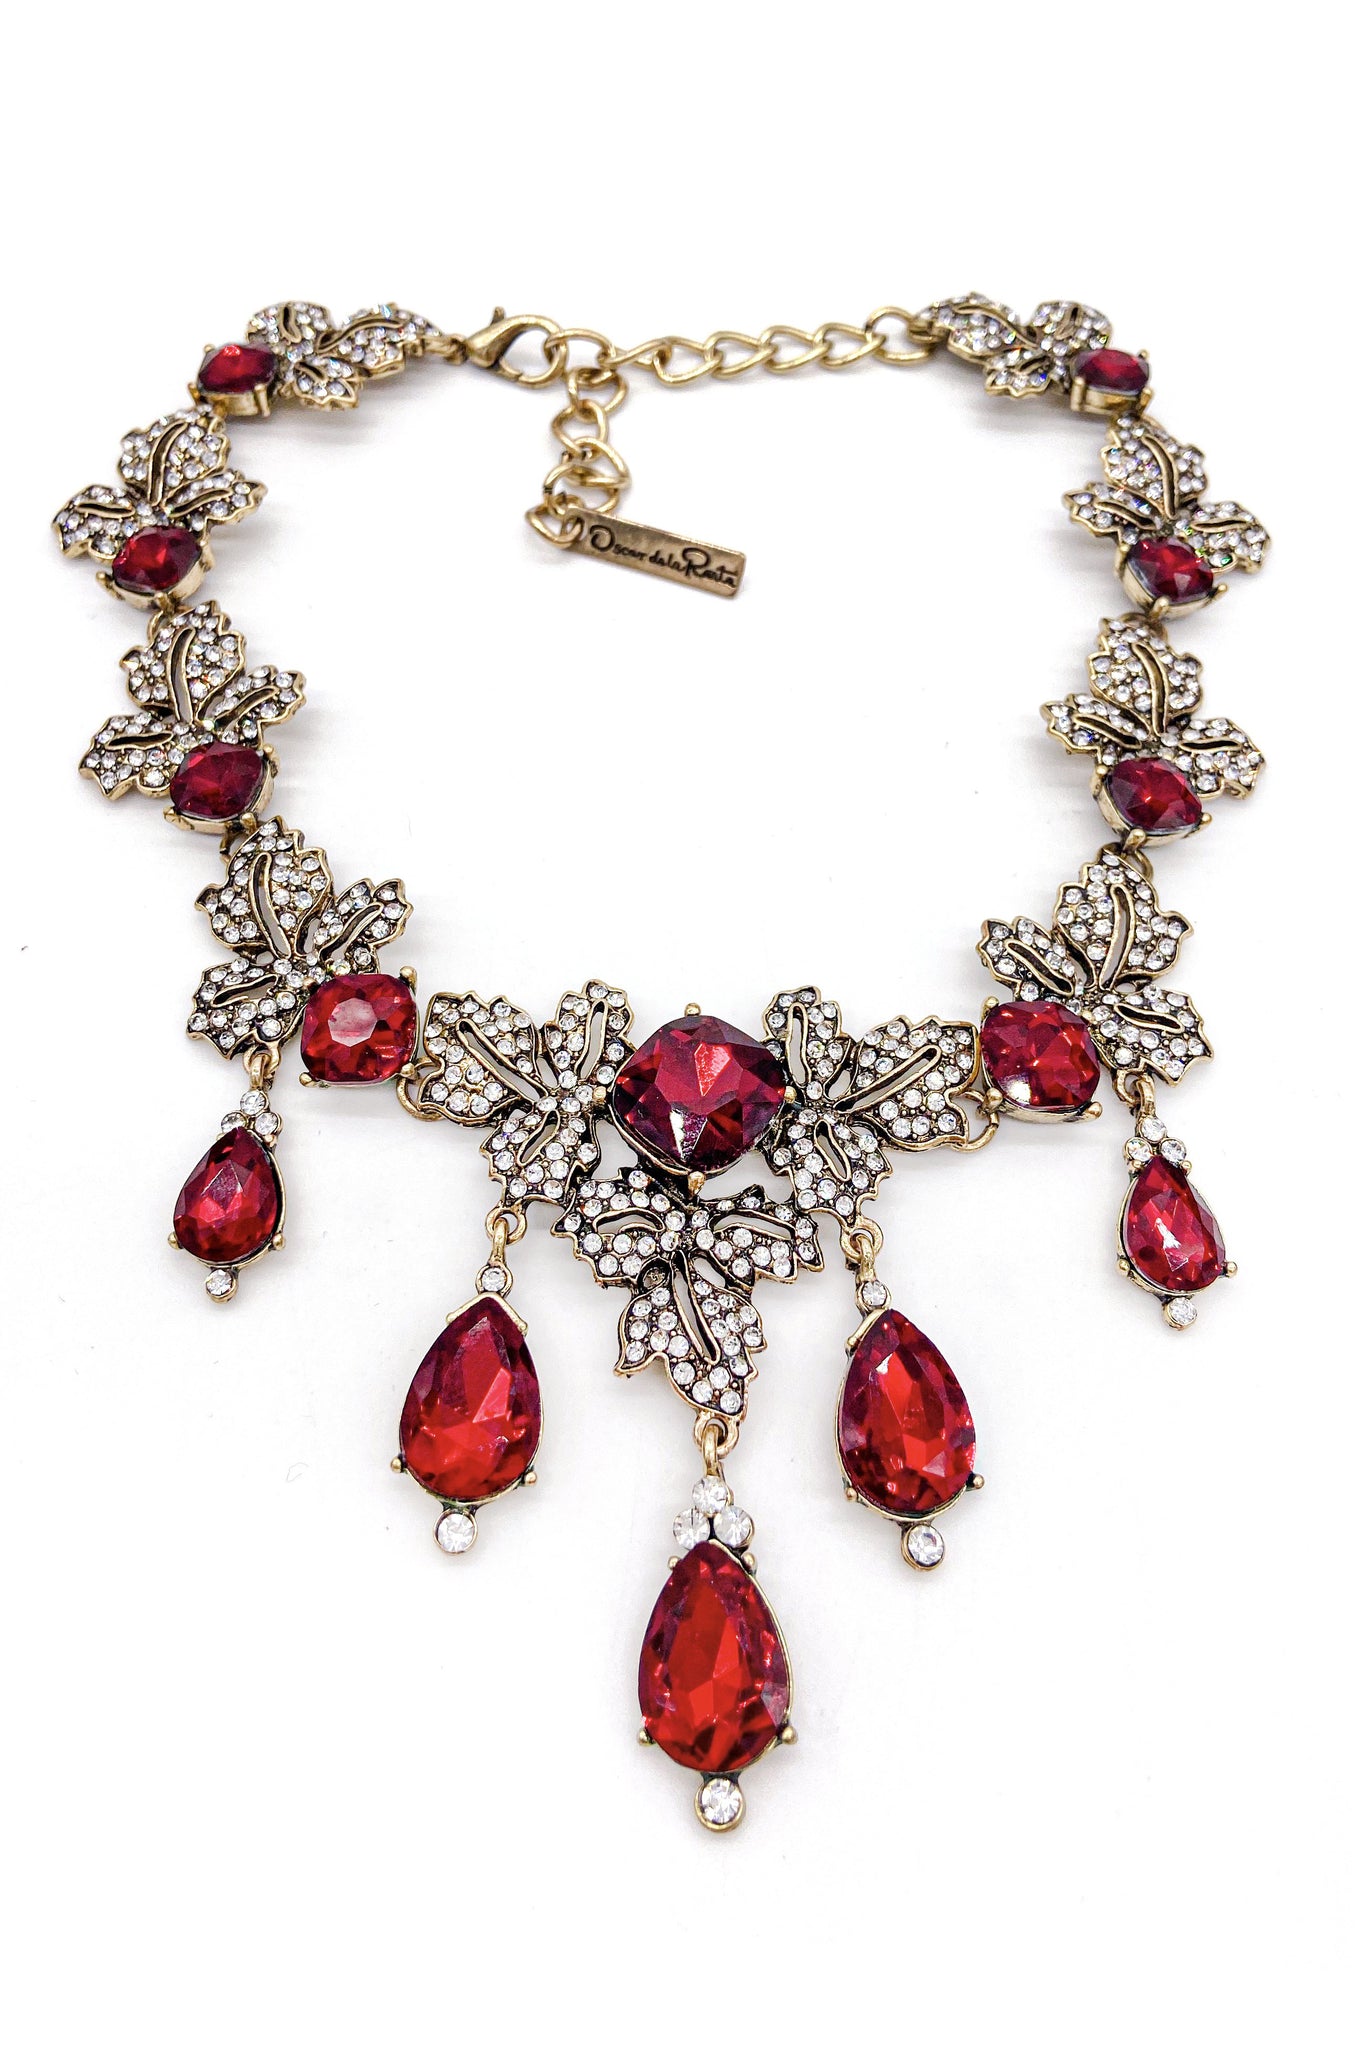 Georgian Revival Ruby Red & 14K Gold GP filigree Bib Statement necklace  lucite | eBay